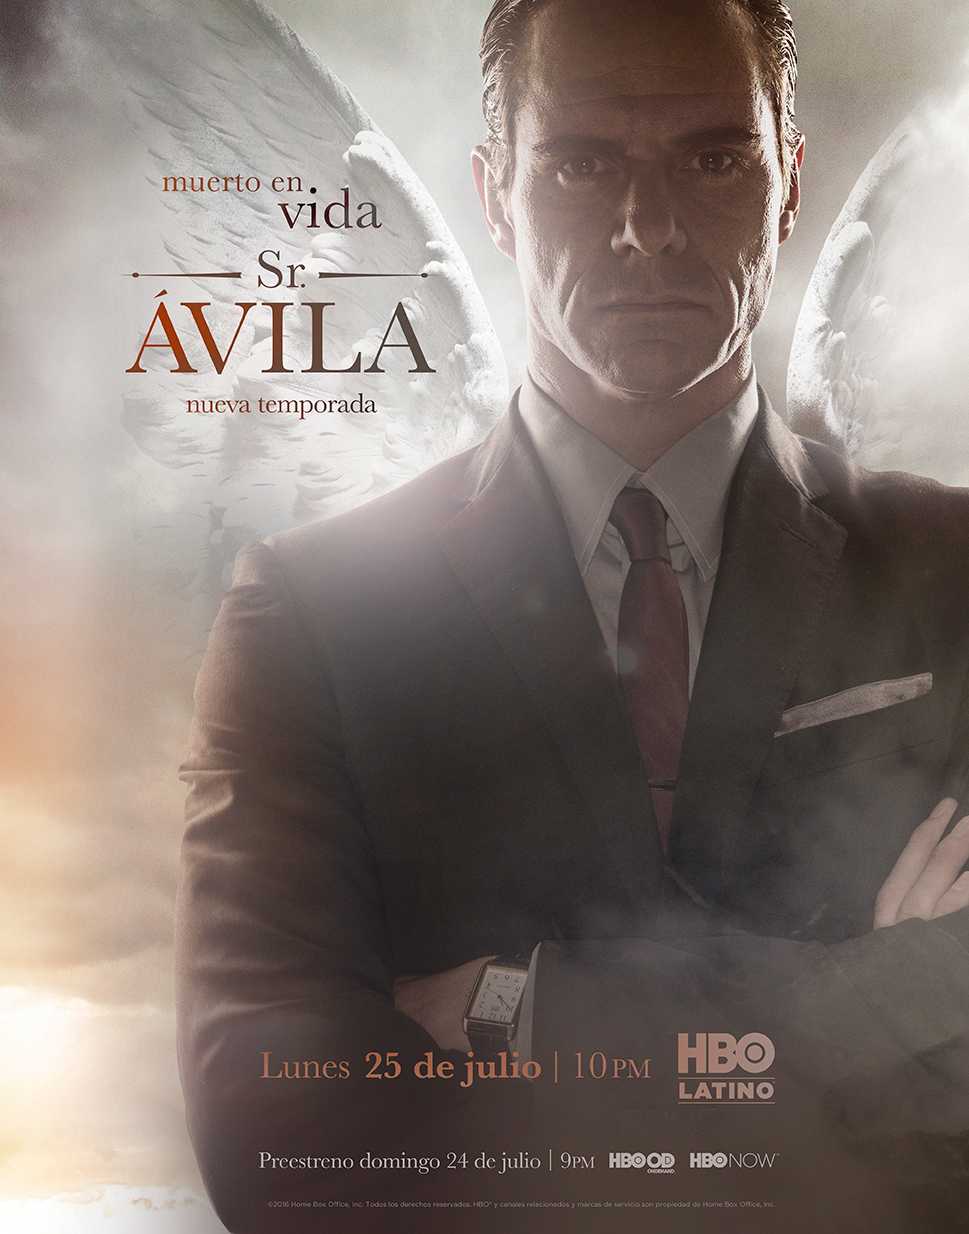 Trùm sát thủ (phần 2) - Mr. avila (season 2)